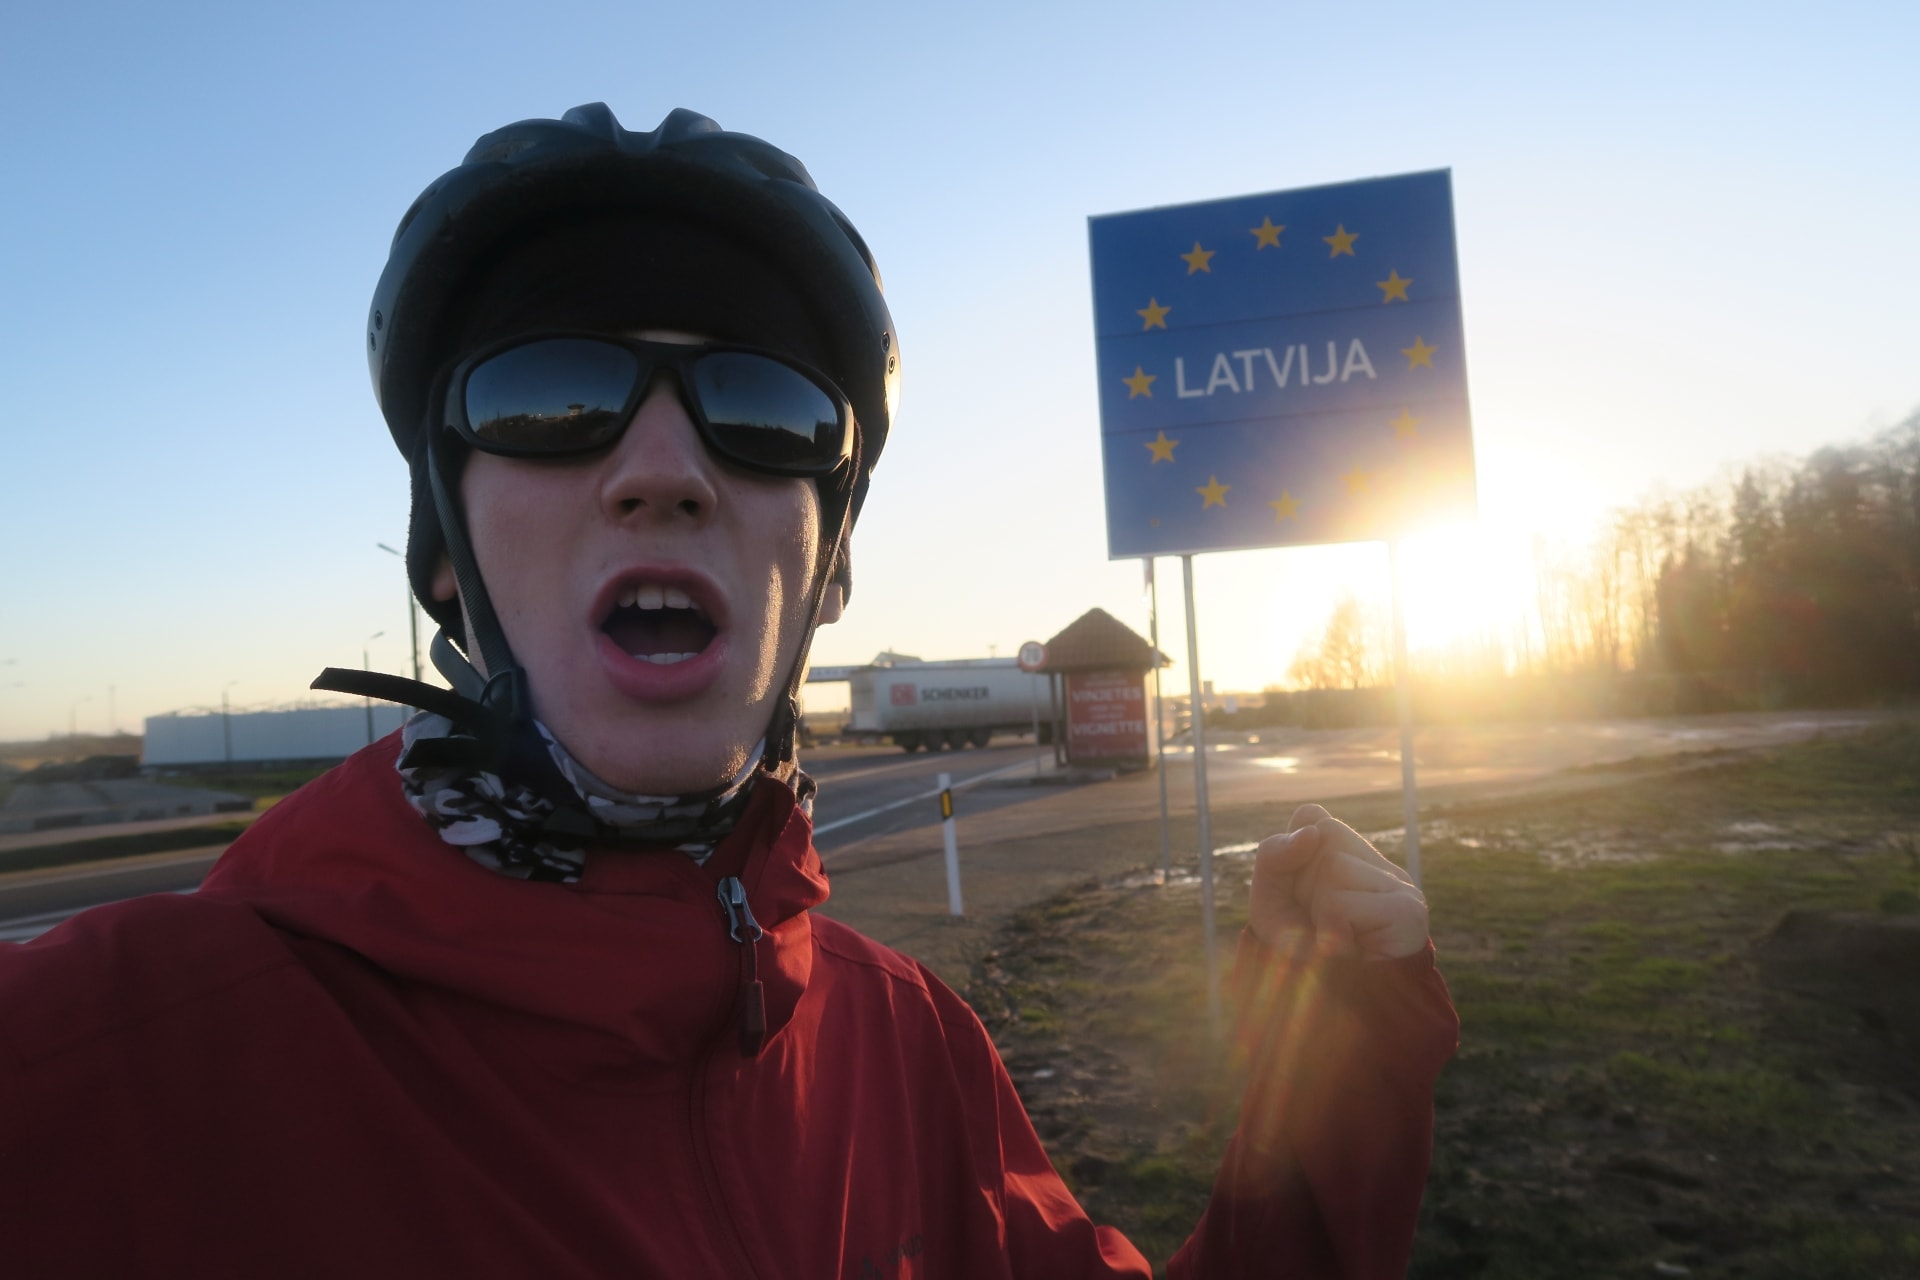 Celebrating at the Latvian border